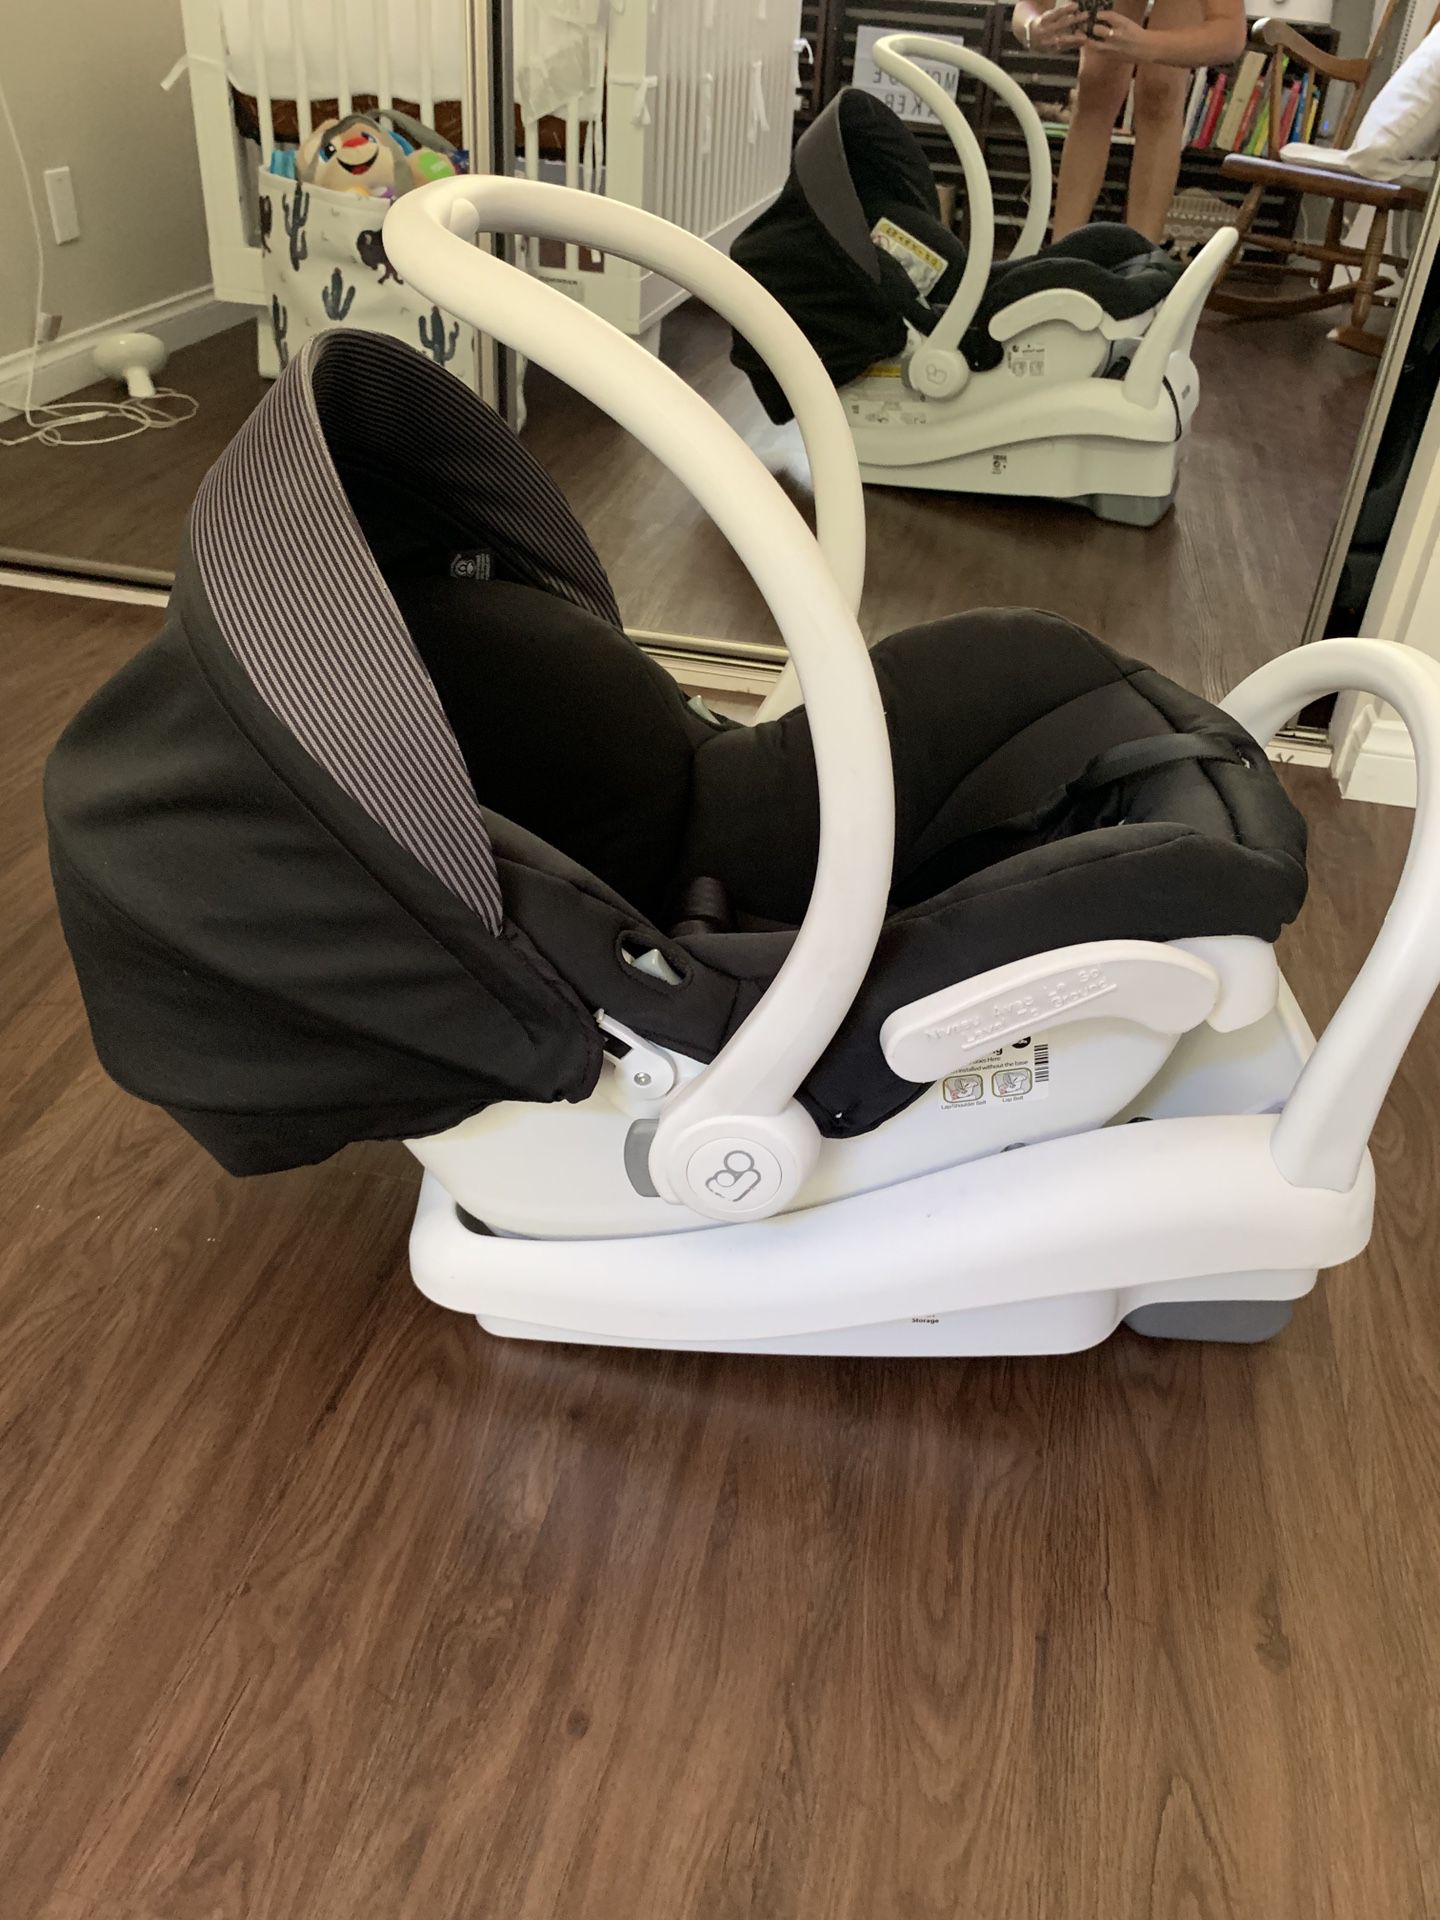 Maxi Cosi infant car seat!